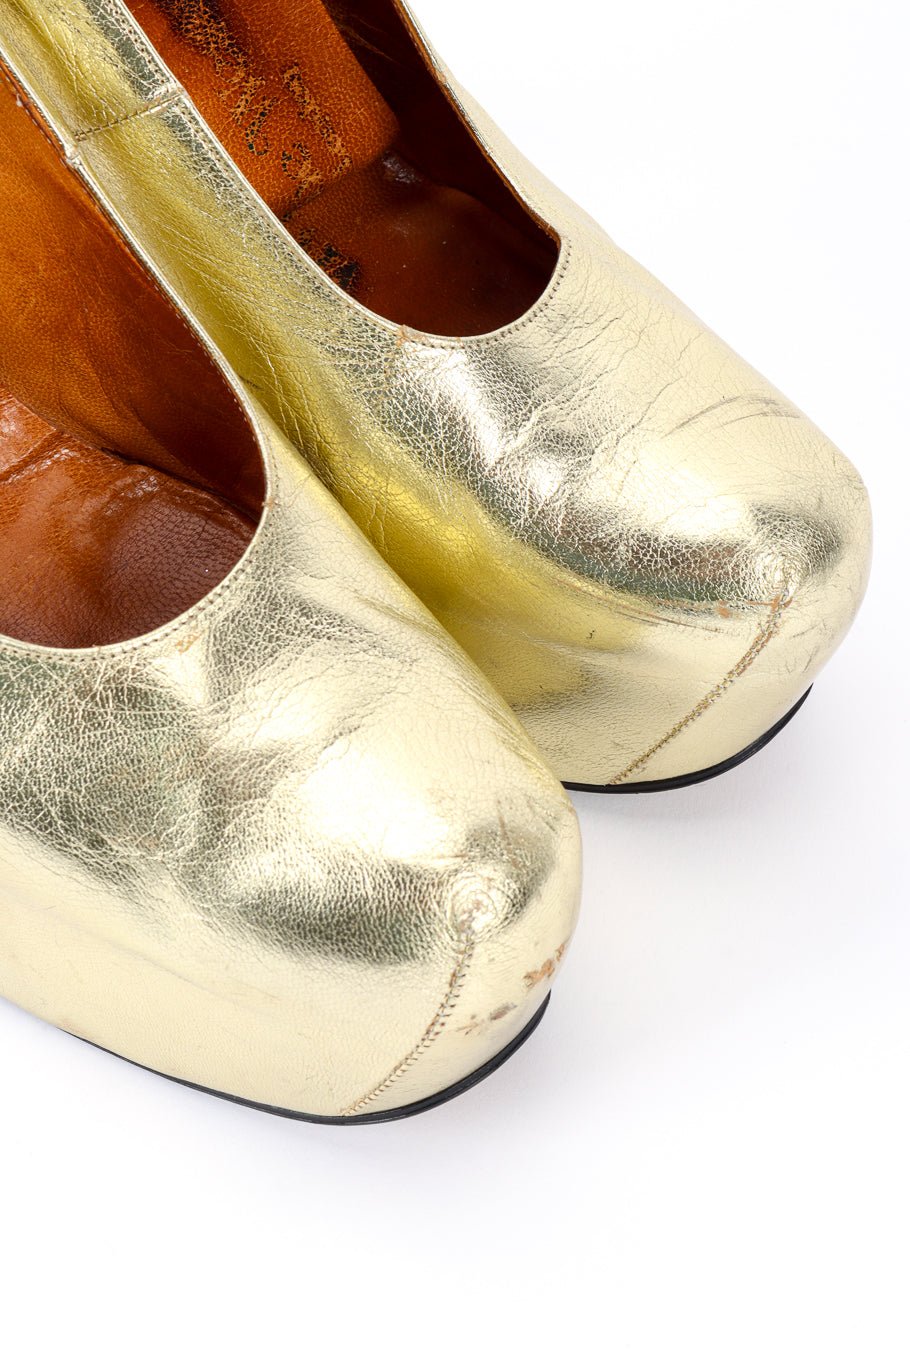 Vintage Vivienne Westwood 1993 F/W Metallic Gold Elevated Court Shoe toe closeup @recessla